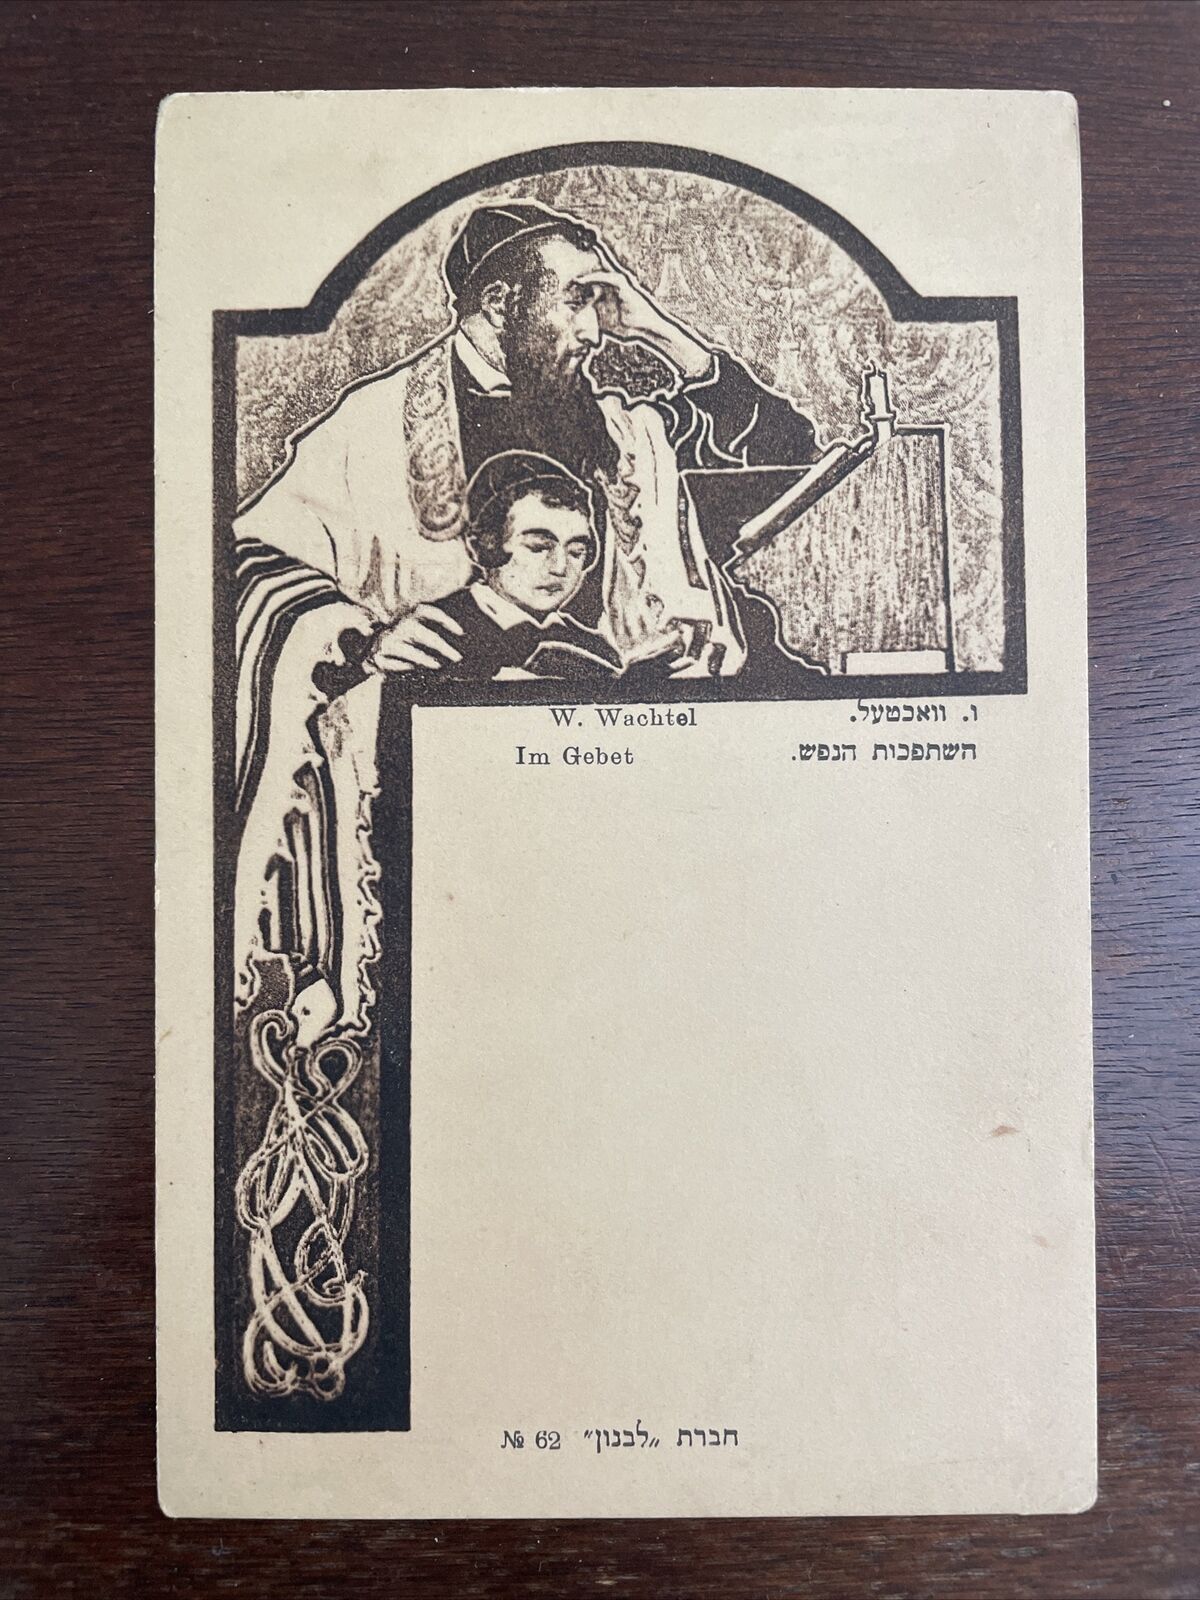 C. 1917, Postcard, W. WACHTEL, Jewish, Im Gebet, Praying